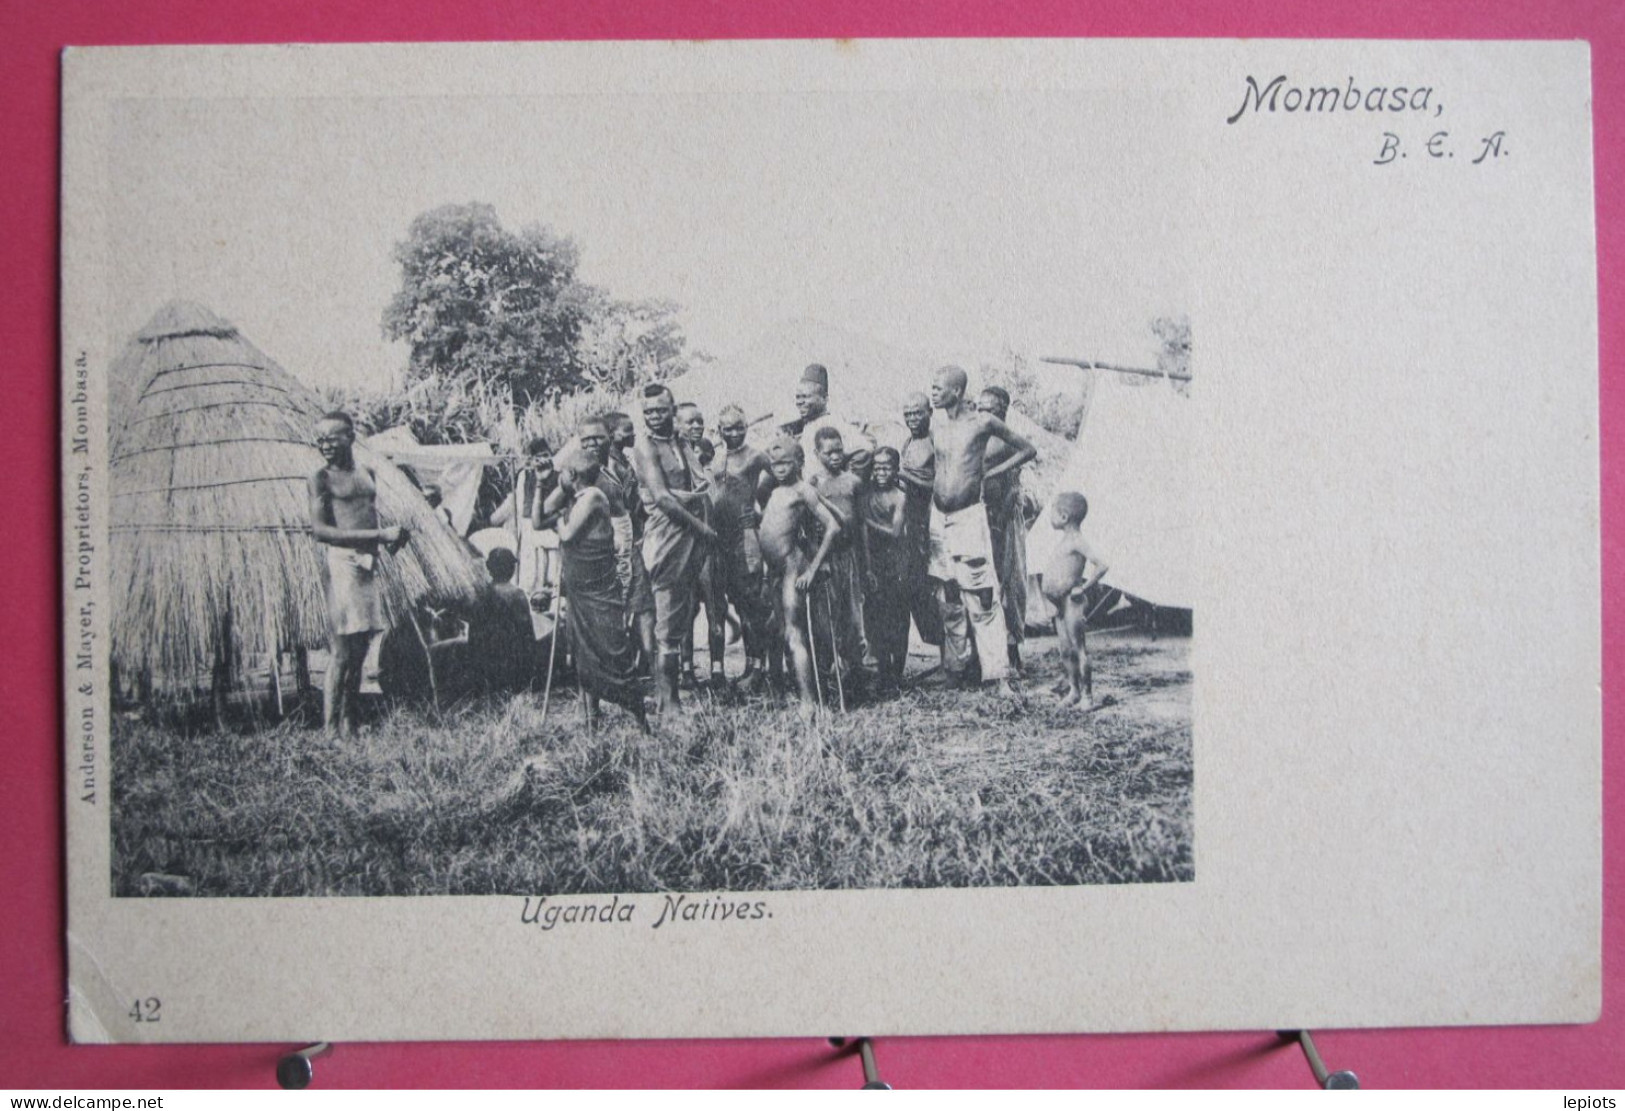 Visuel Très Peu Courant - Kenya - Mombasa - Uganda Natives - Précurseur - Kenya